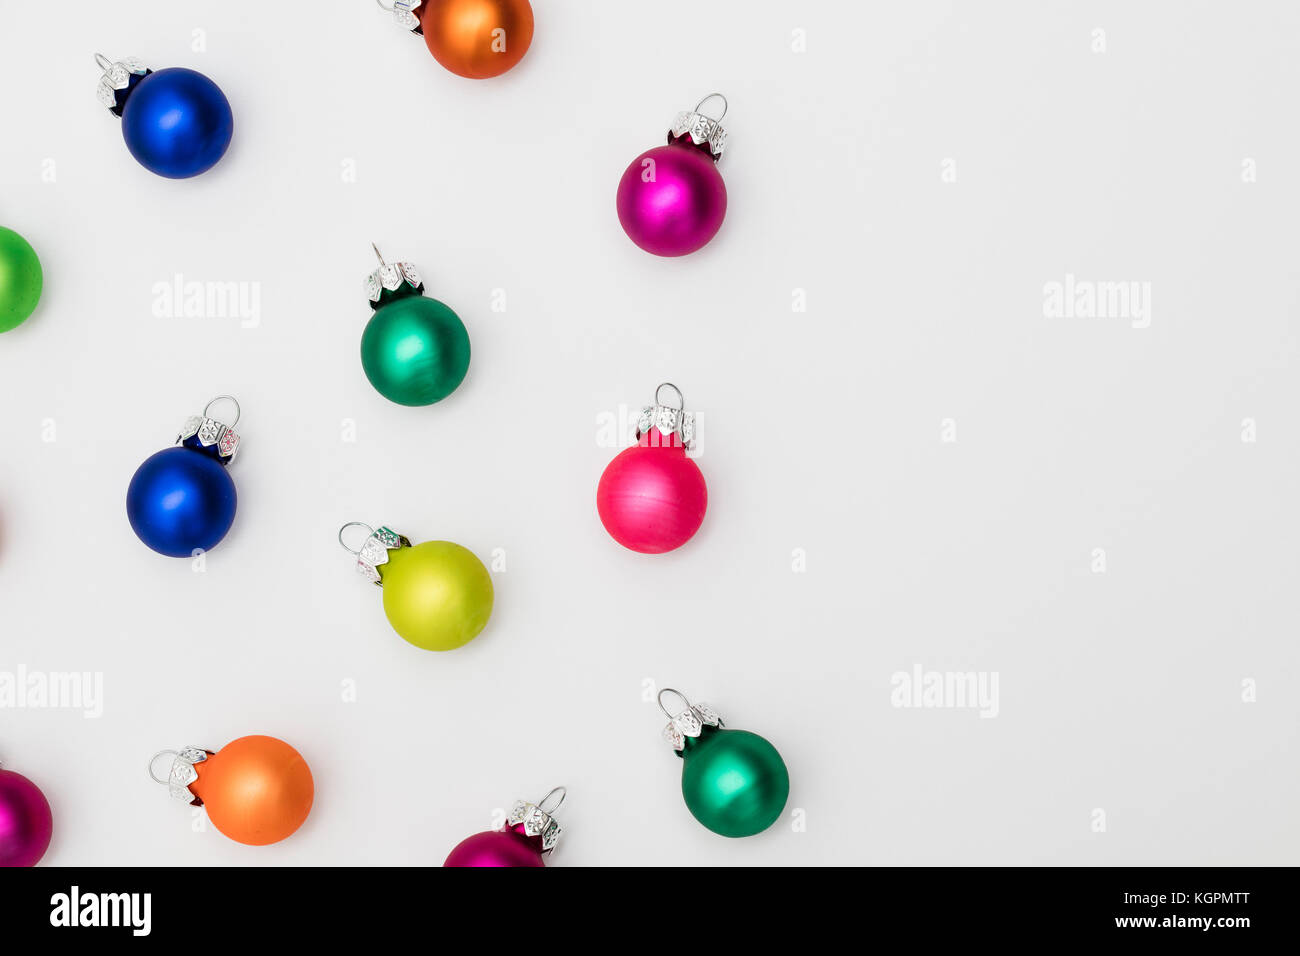 Festive Christmas baubles on a plain white background Stock Photo